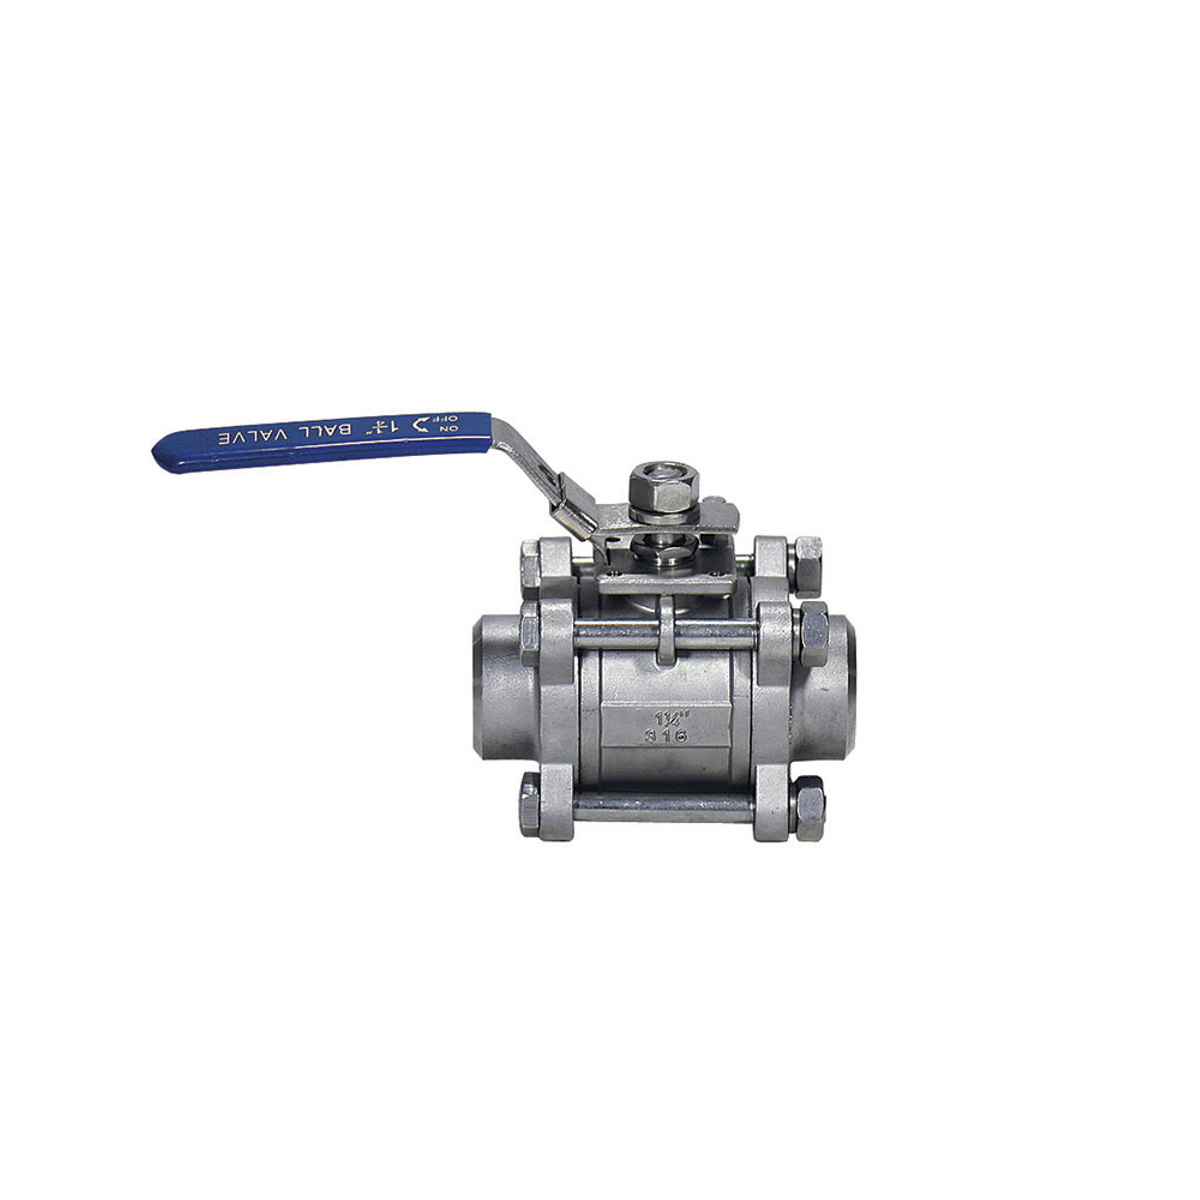 ball valve, two-part stainless steel FB LD f.thr/m.thr, 1.1/4